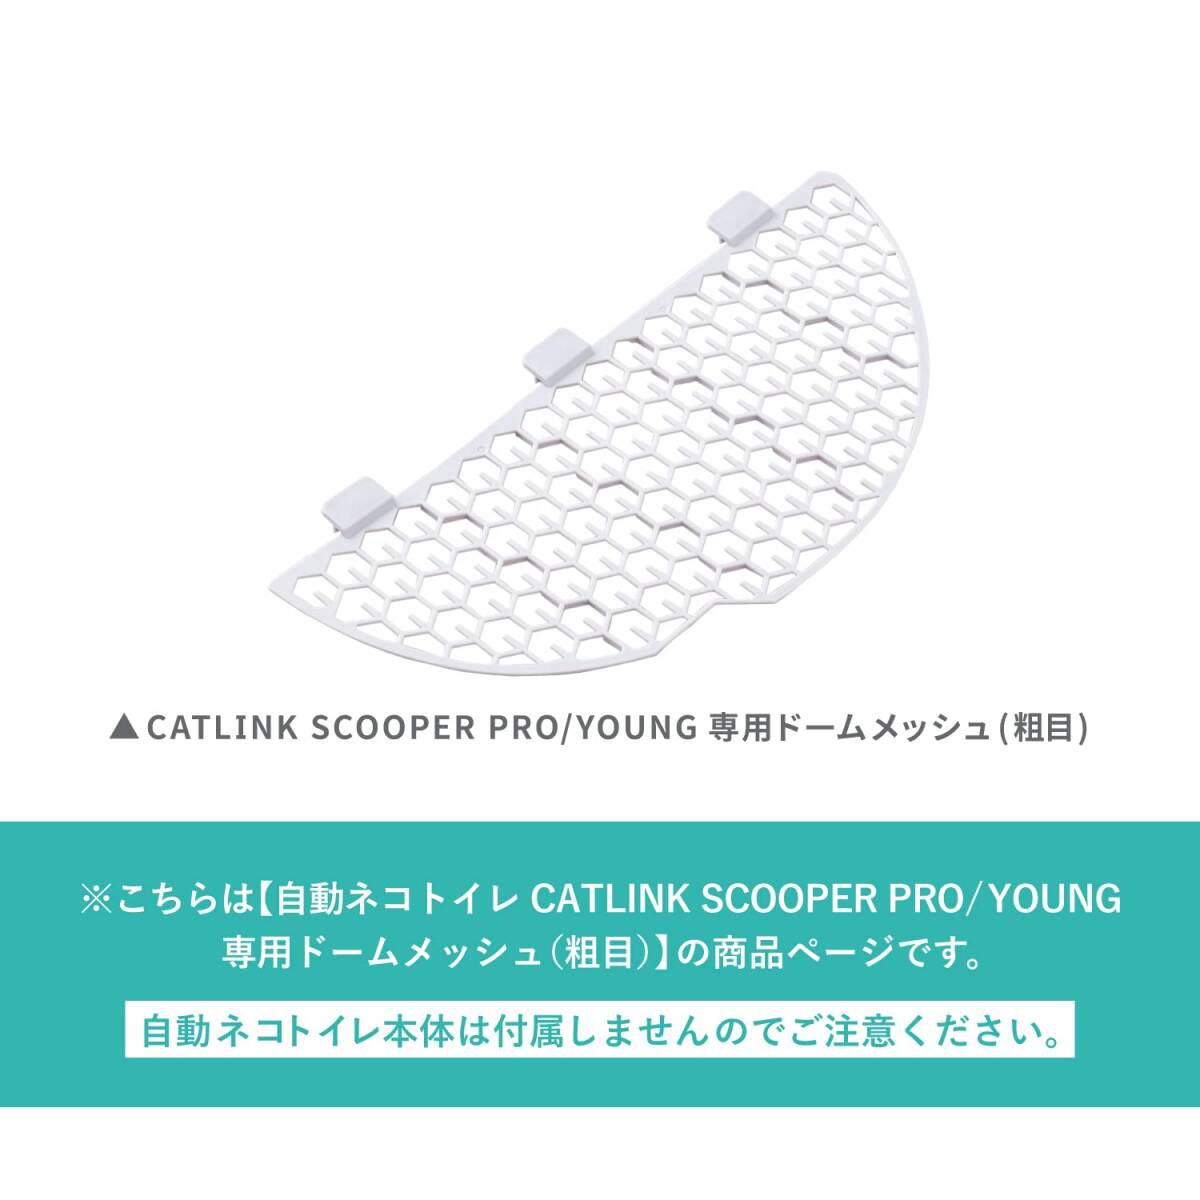  автоматика кошка туалет CATLINK SCOOPER PRO/YOUNG кошка links Cooper PRO/PRO-X/YOUNG специальный ( купол me